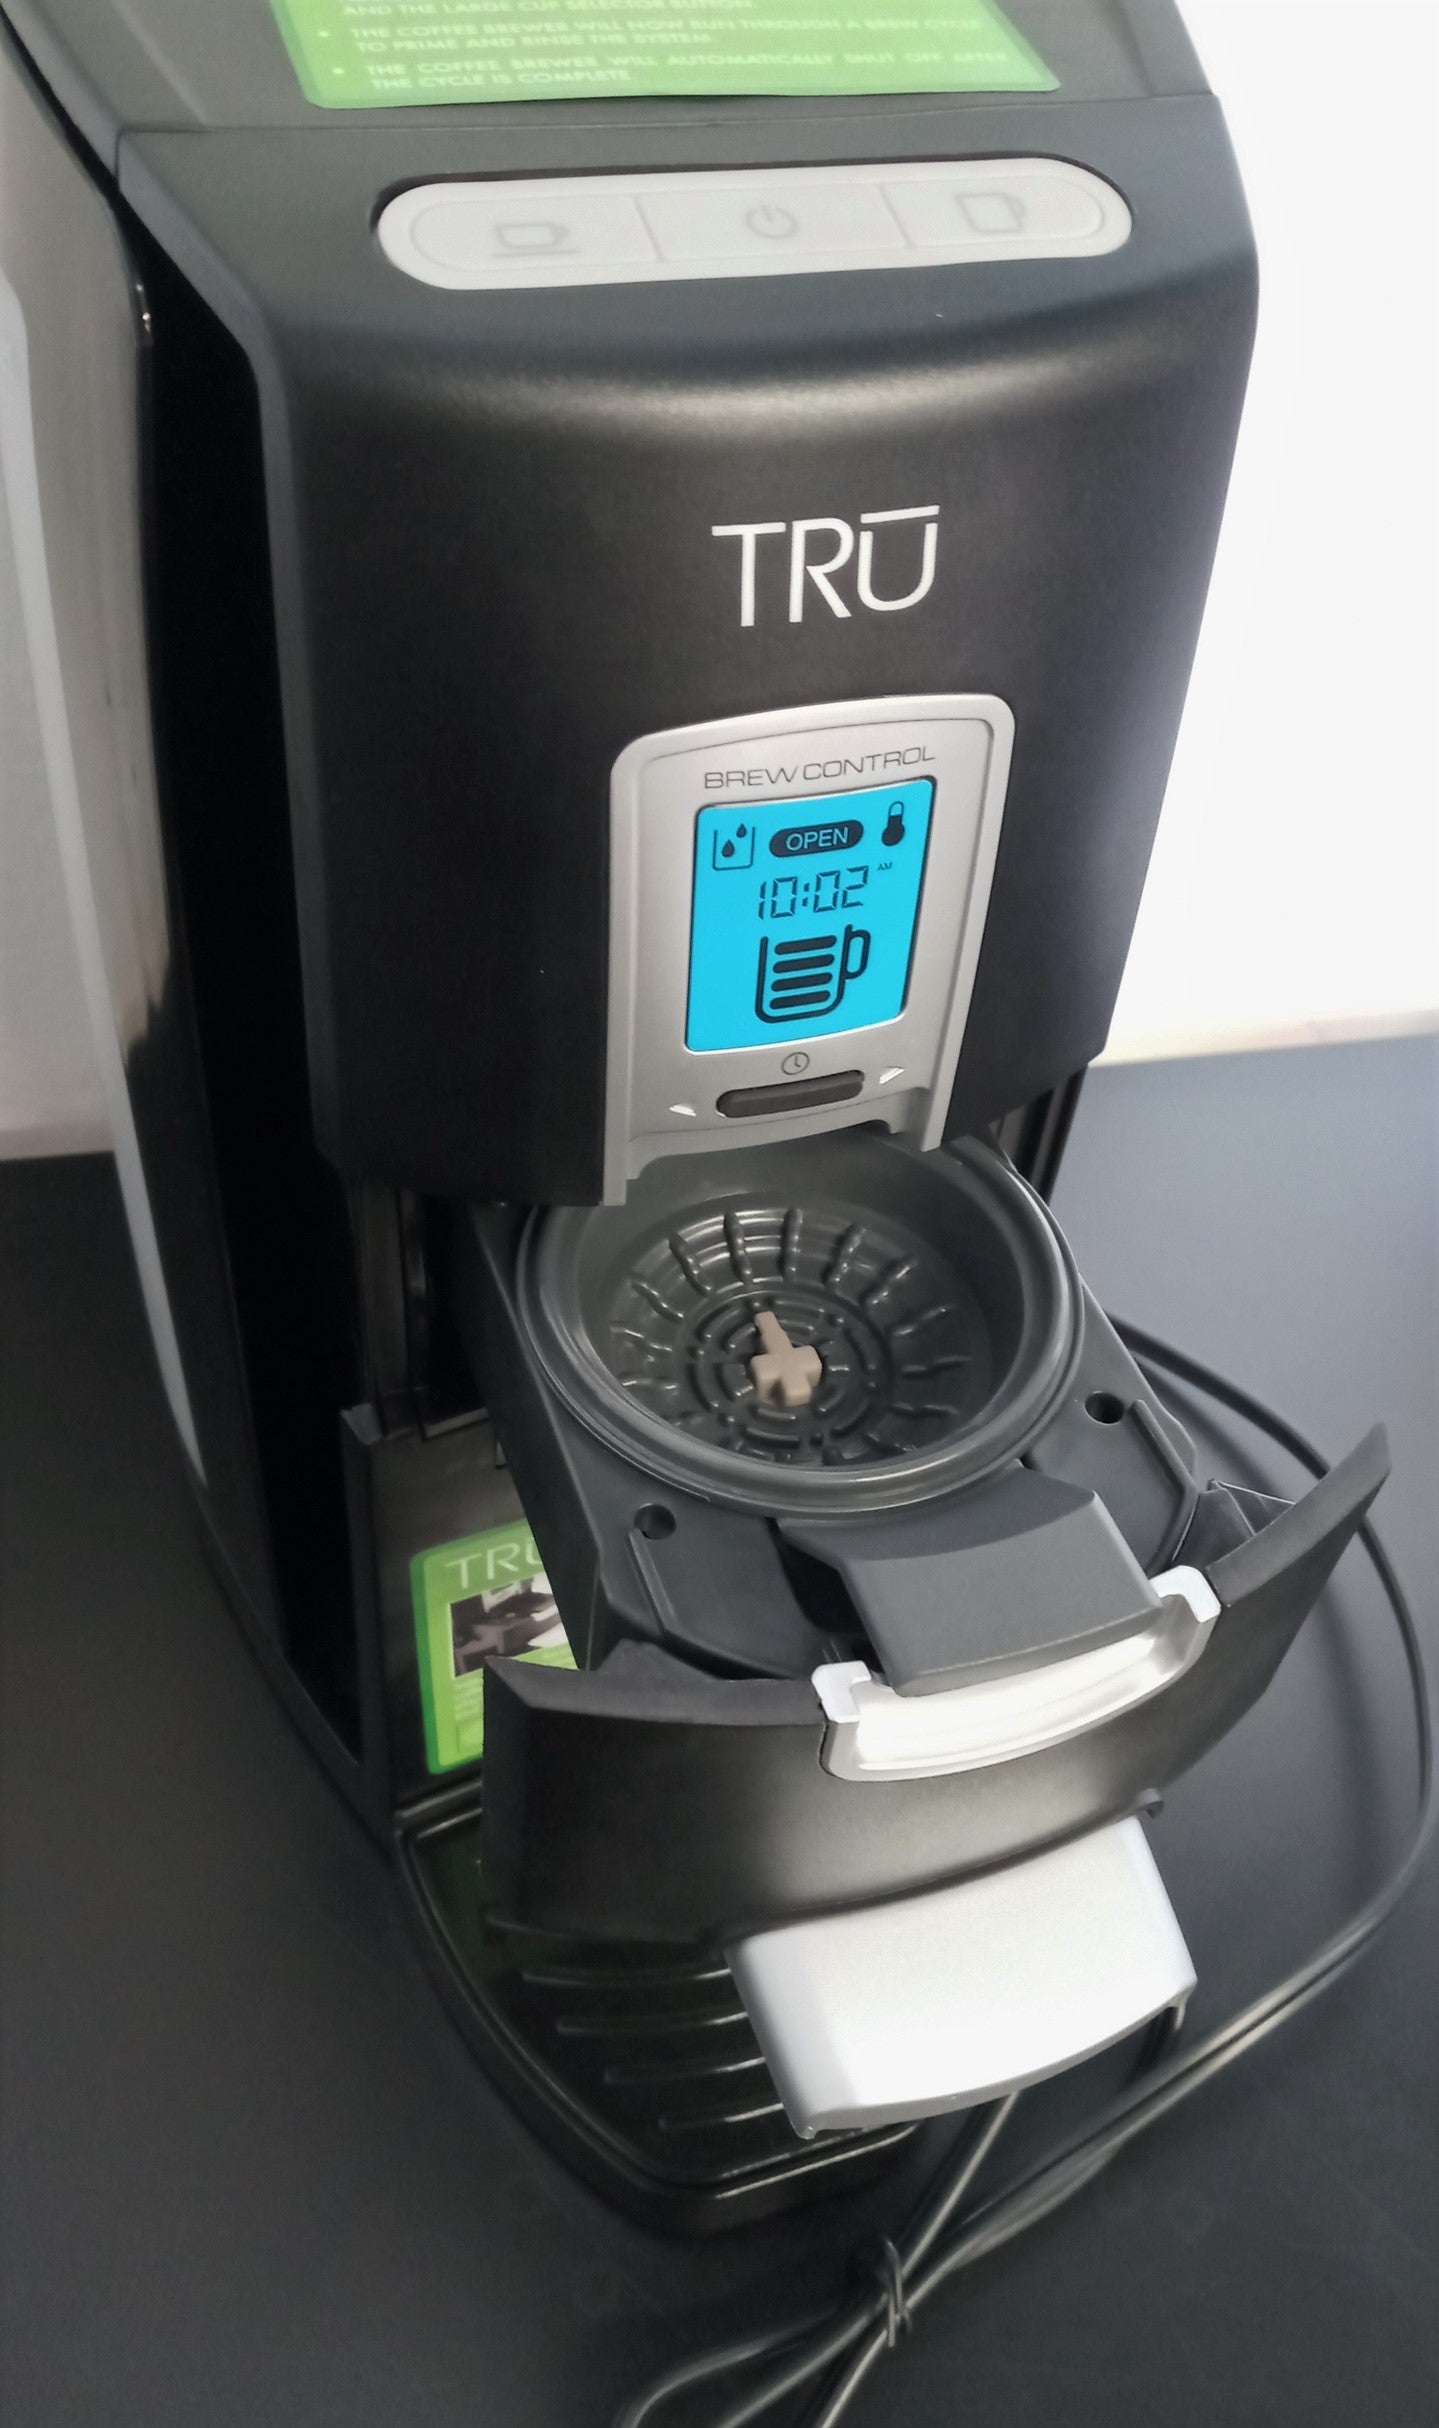 TRU Rapid Cold Brew Coffee Maker